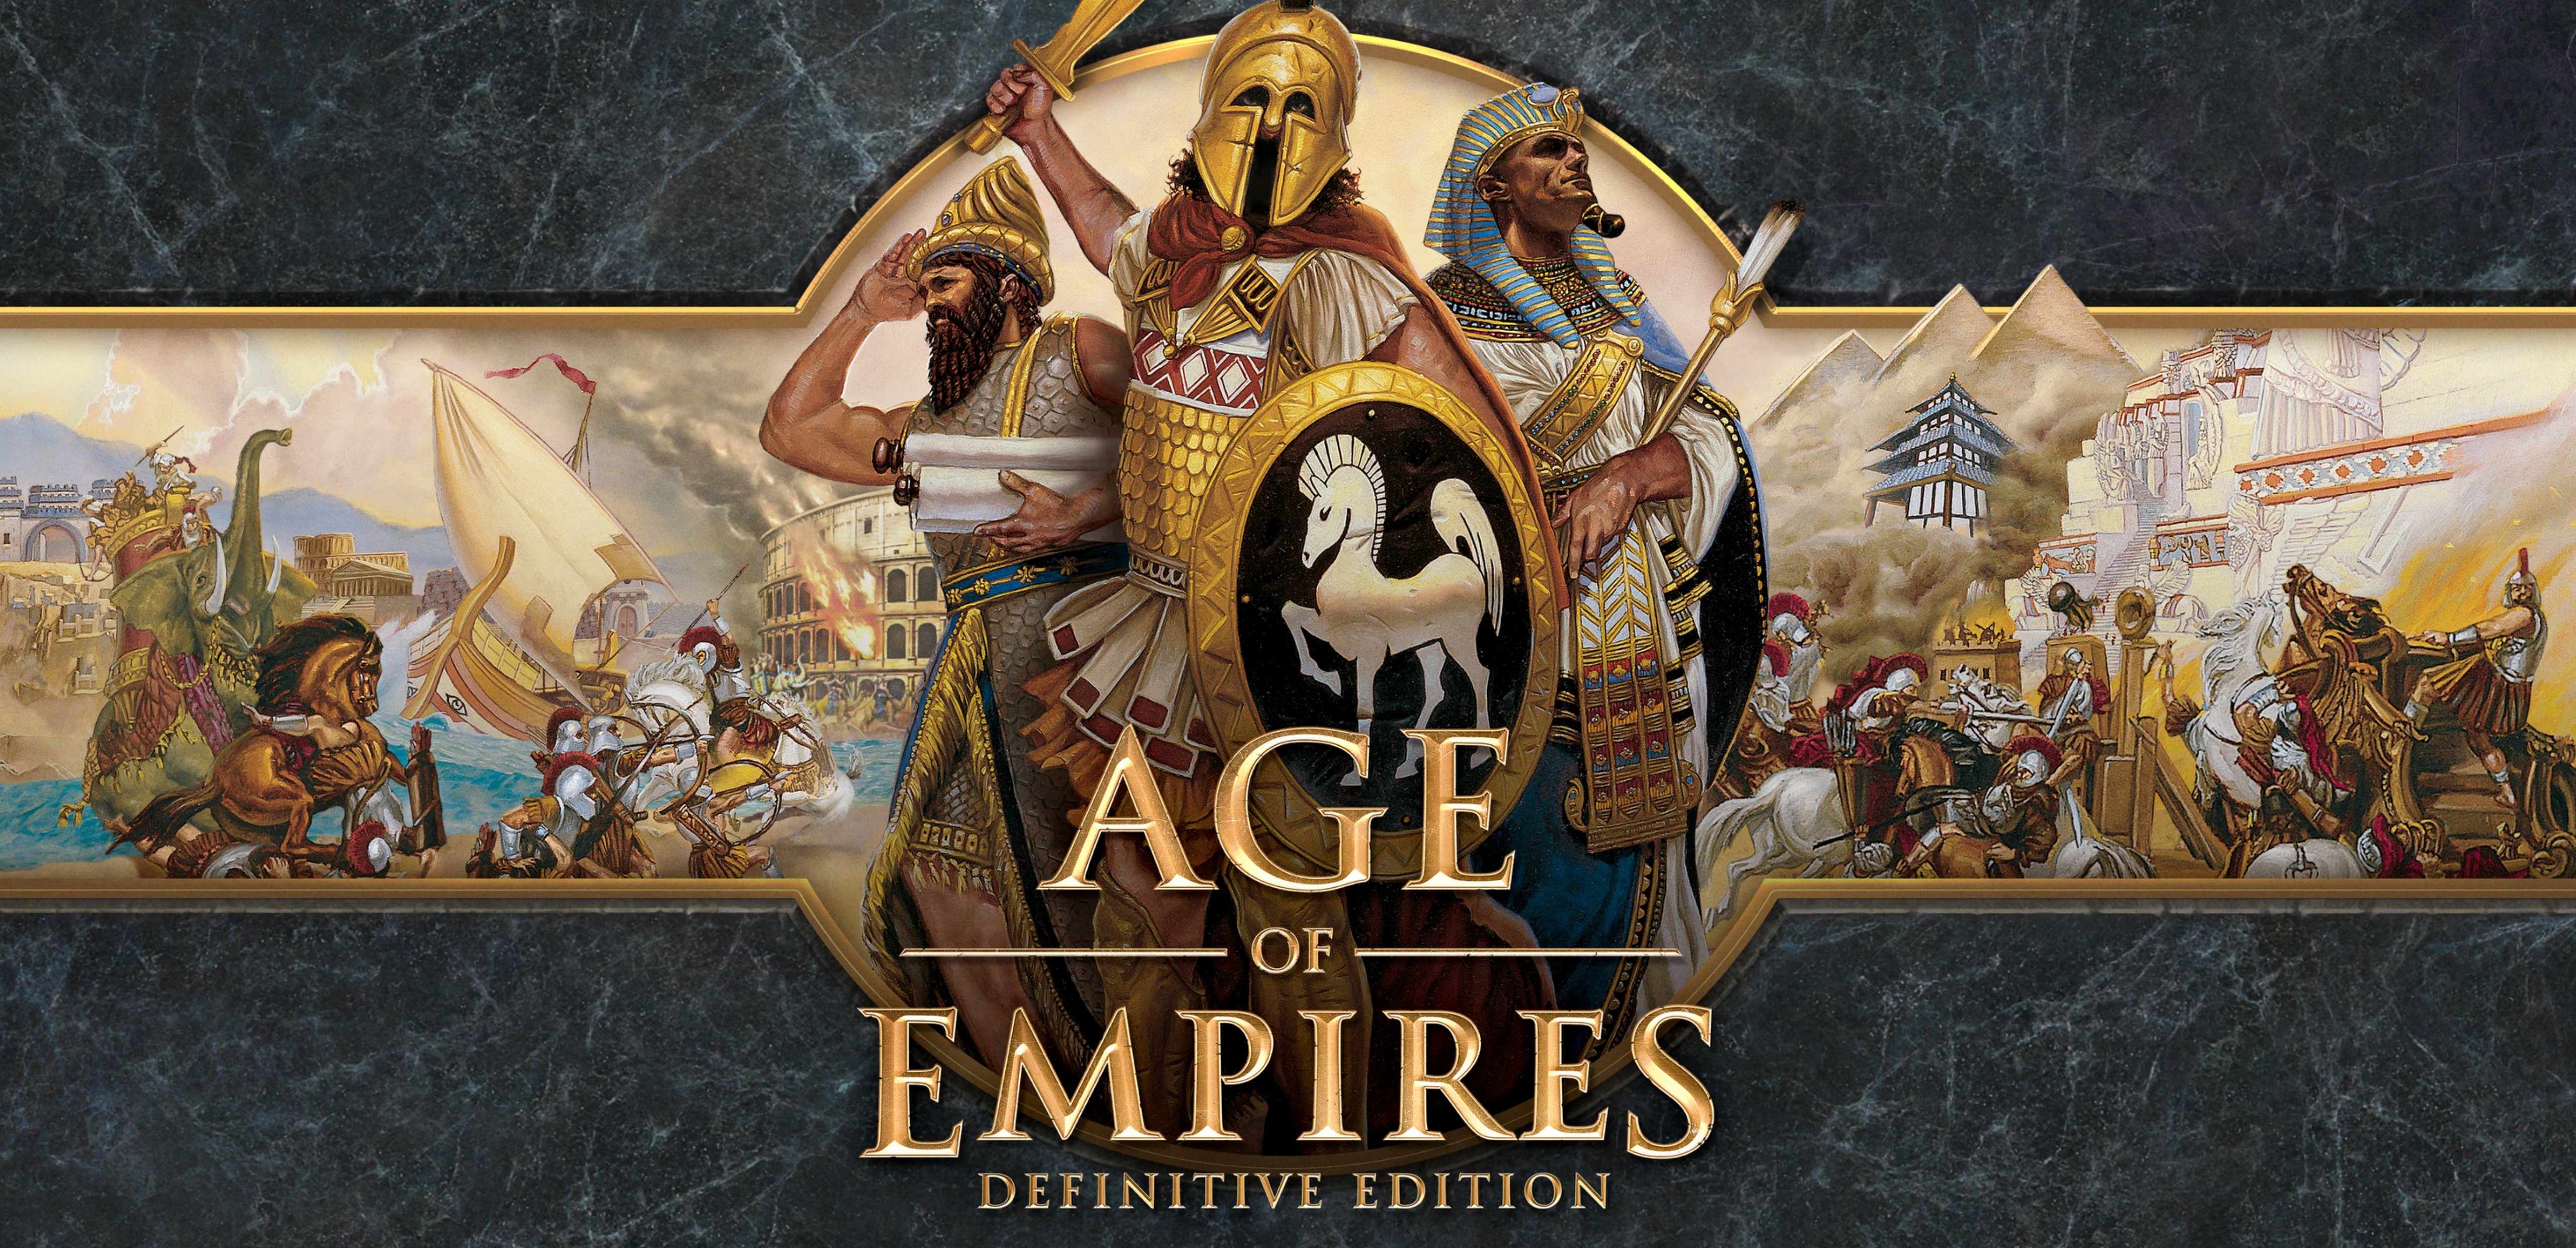 Age of Empires key art